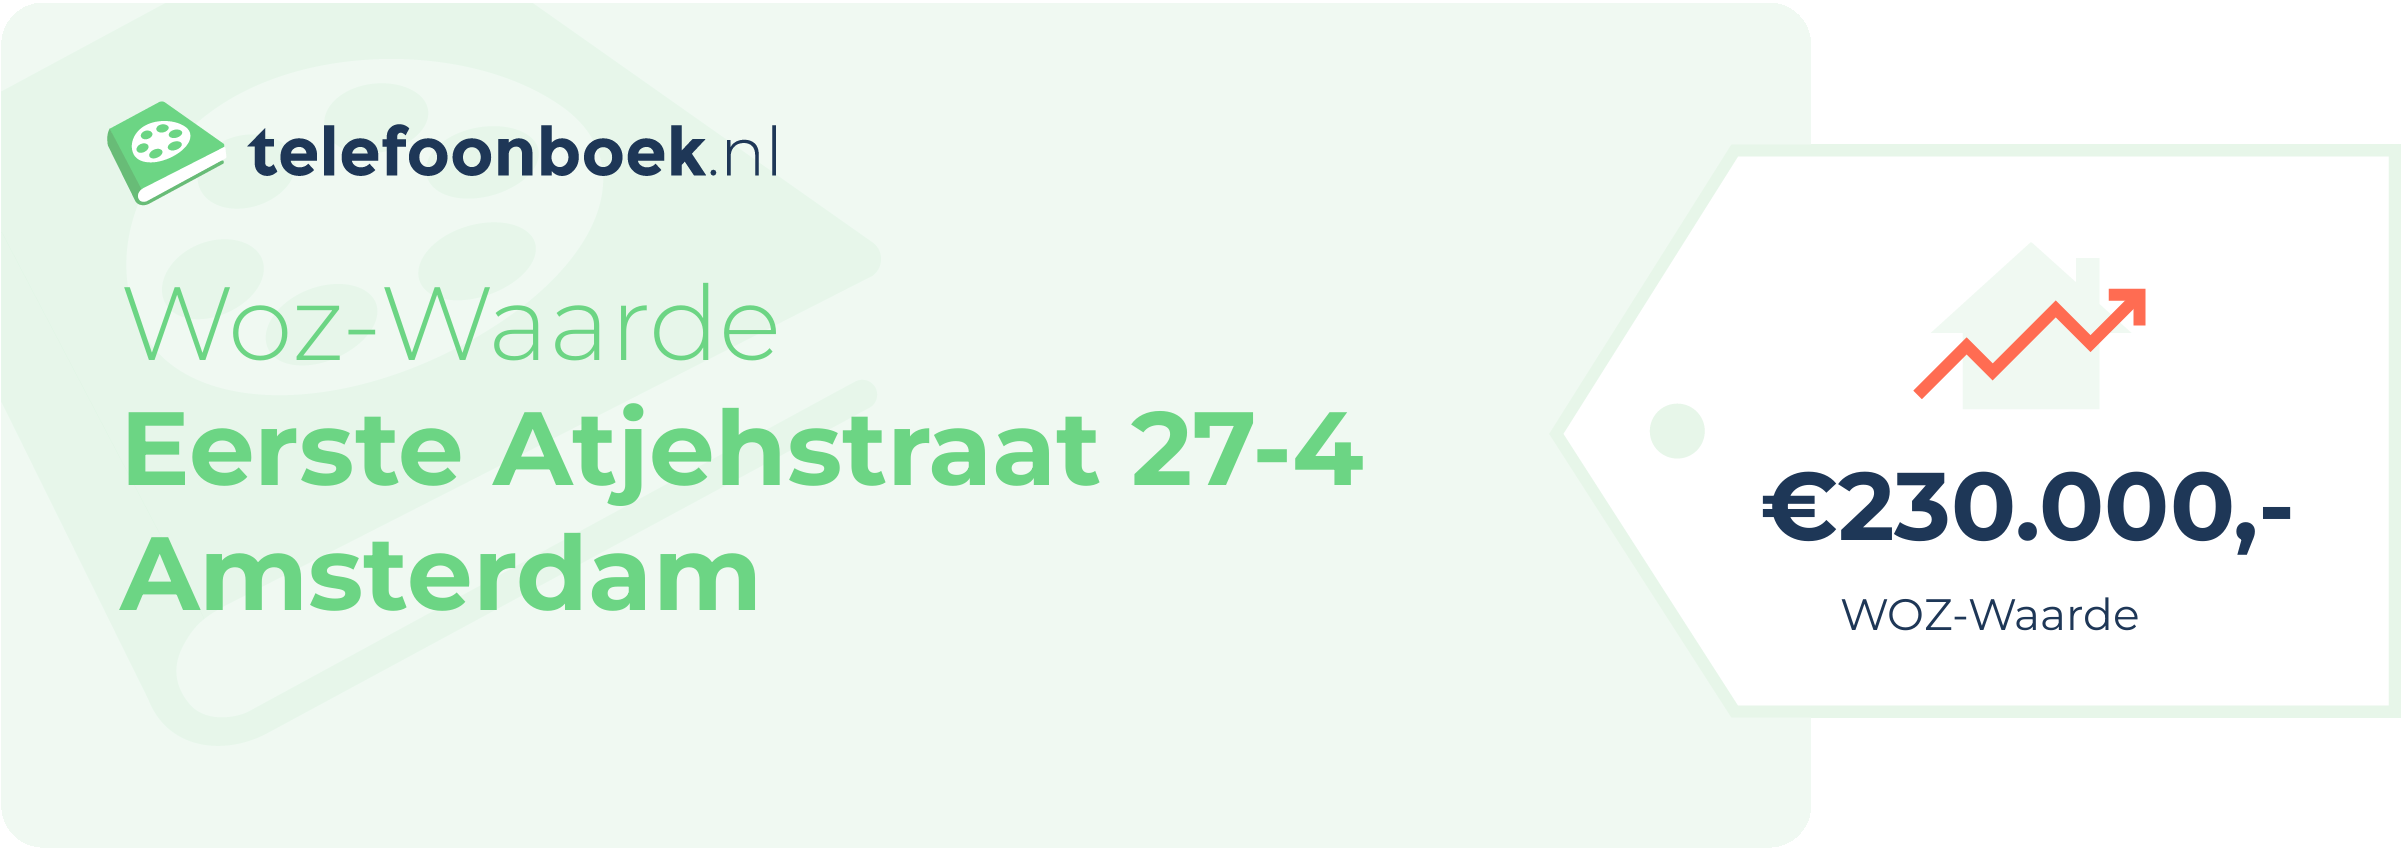 WOZ-waarde Eerste Atjehstraat 27-4 Amsterdam